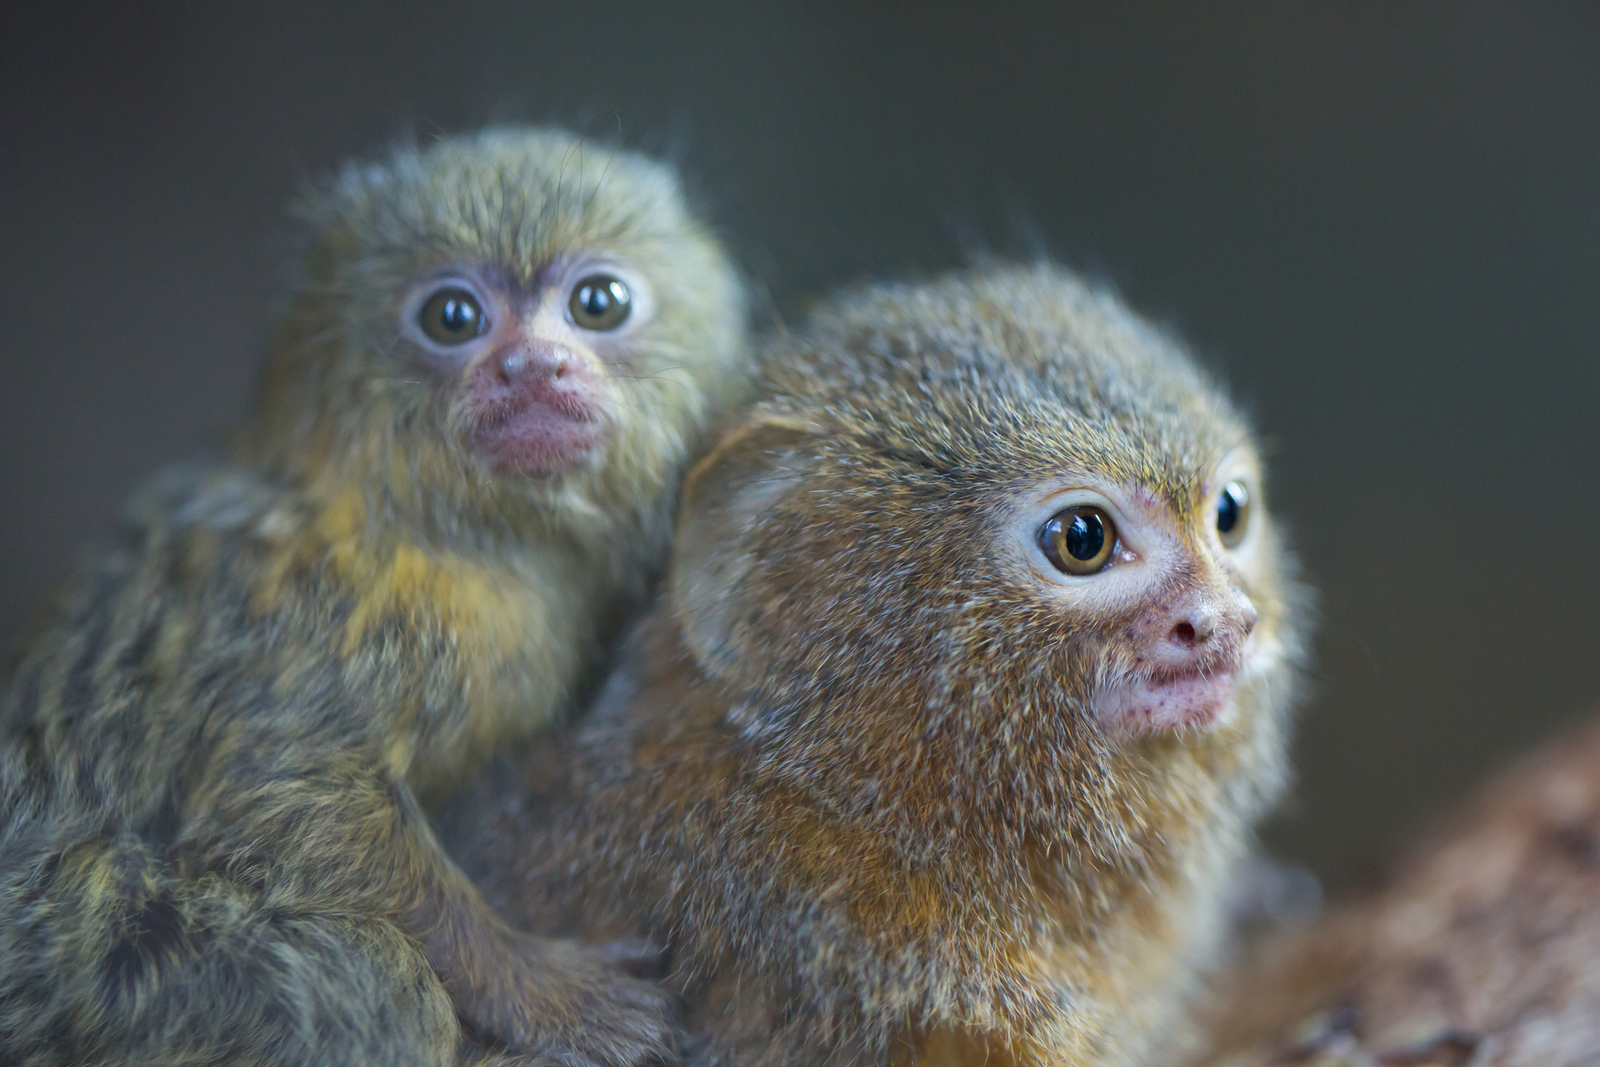 Pygmy marmosets (Cebuella), the smallest monkey in the world. Image Credit: © Cusoncom | Dreamstime.com.